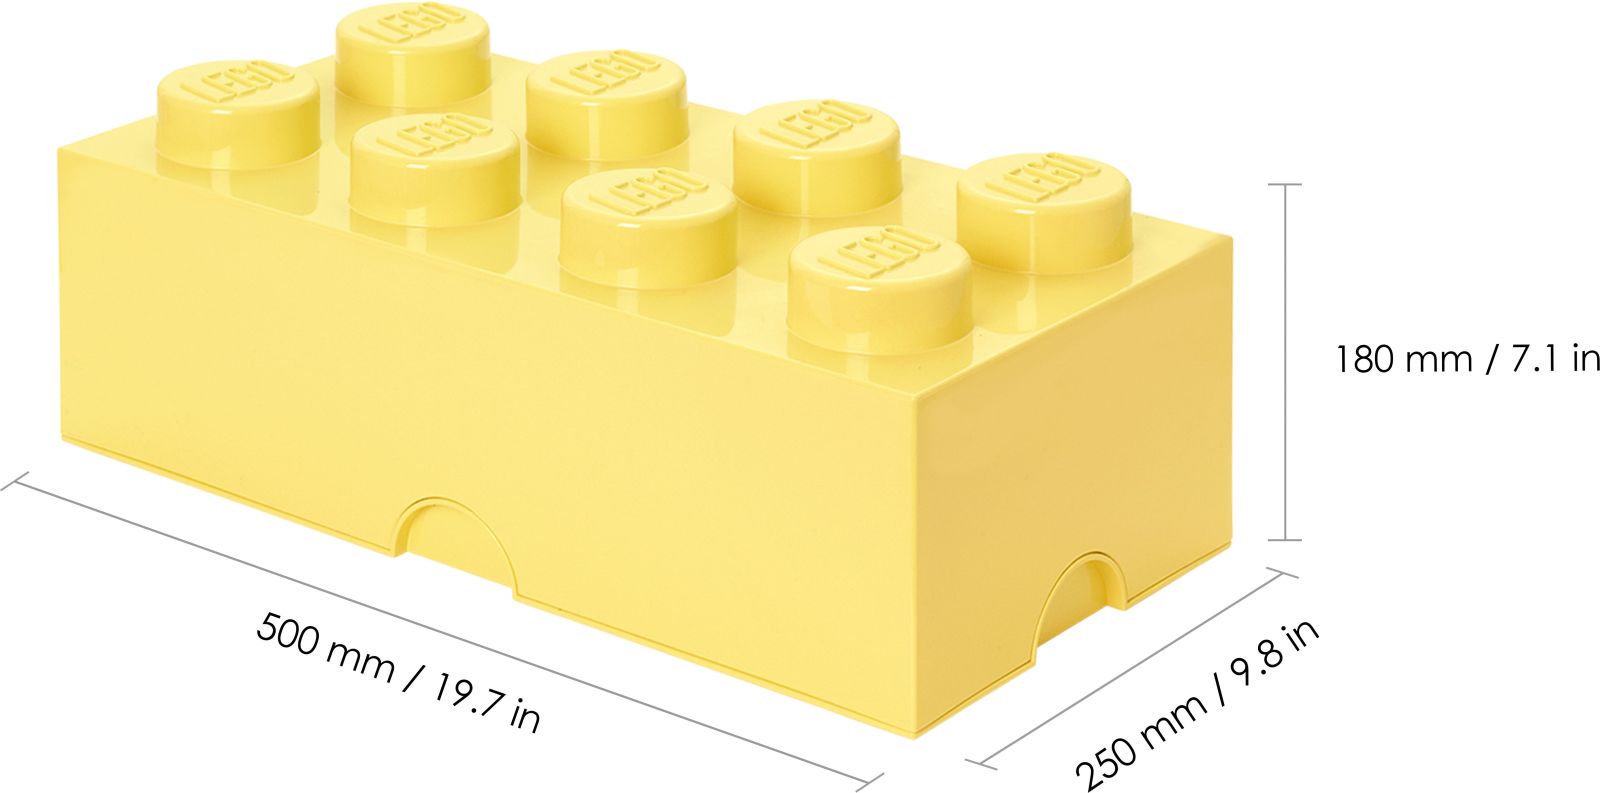 Boite rangement Lego Vert 50 x 25 x 18 cm ?